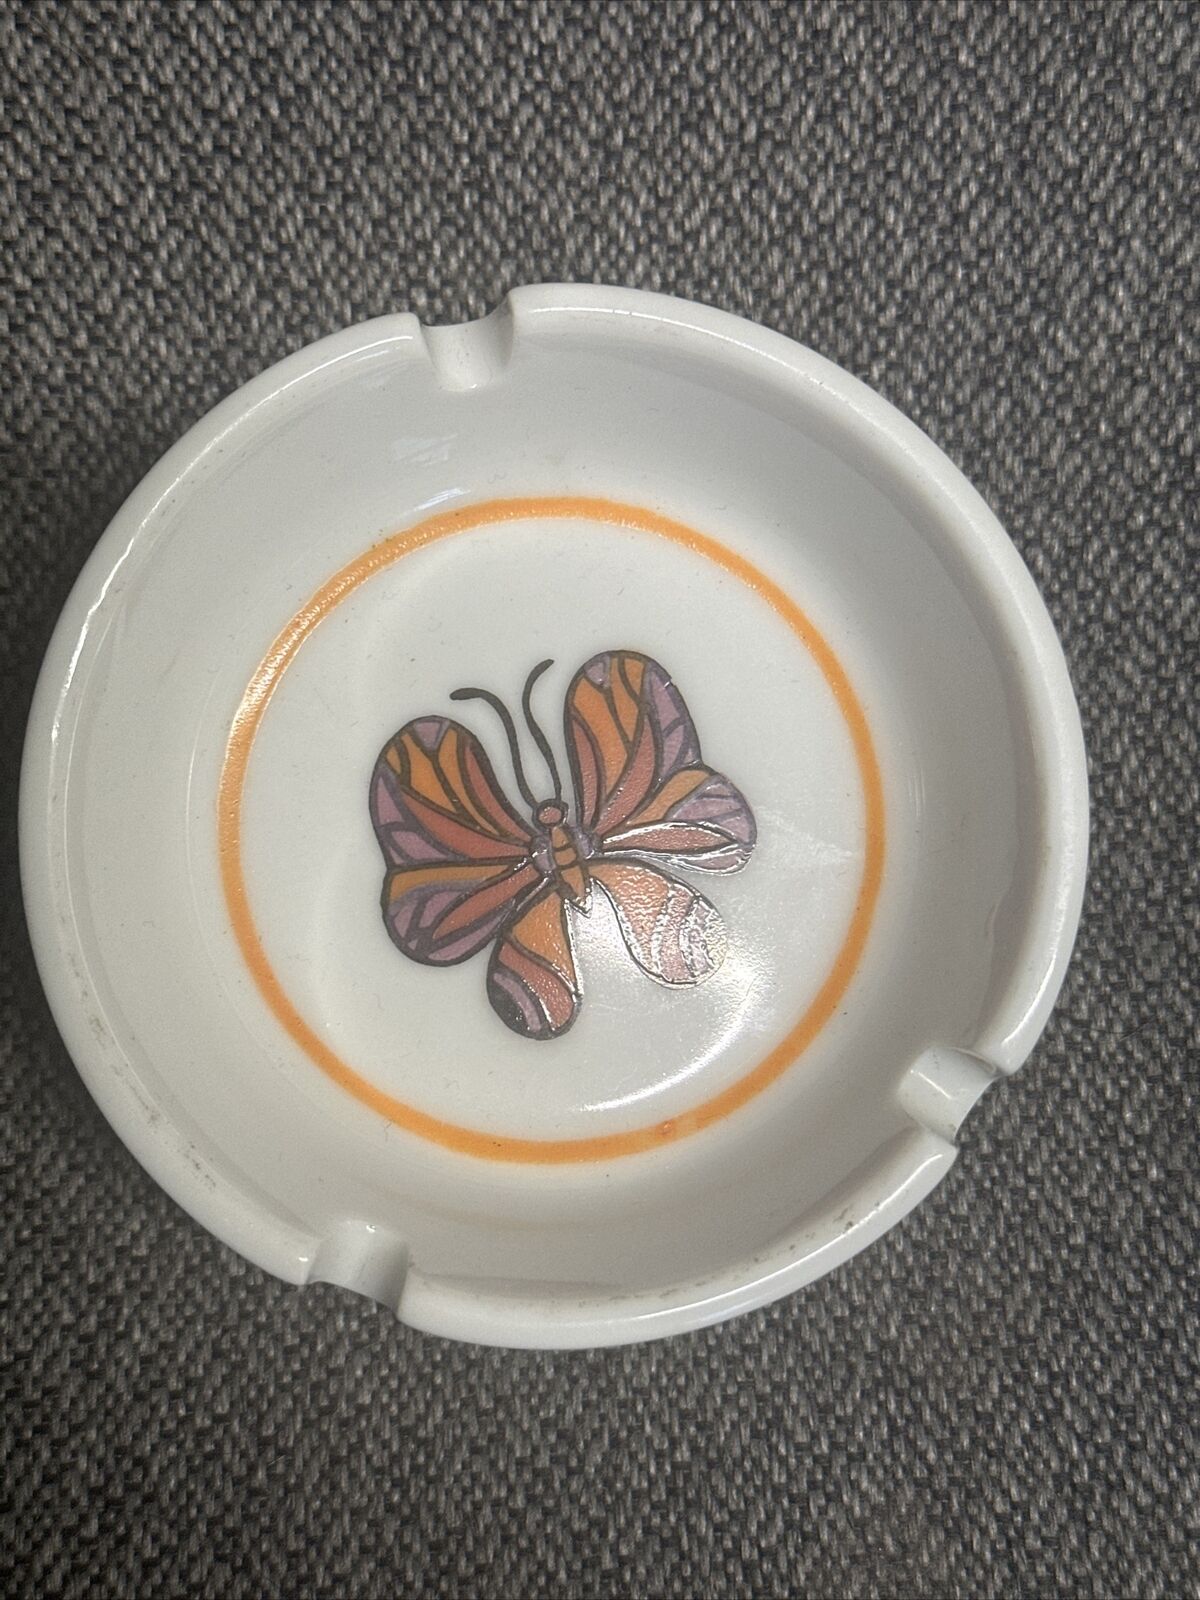 VTG Ashtray Trinket Dish Groovy 60s 70s Orange Purple Floral Butterfly